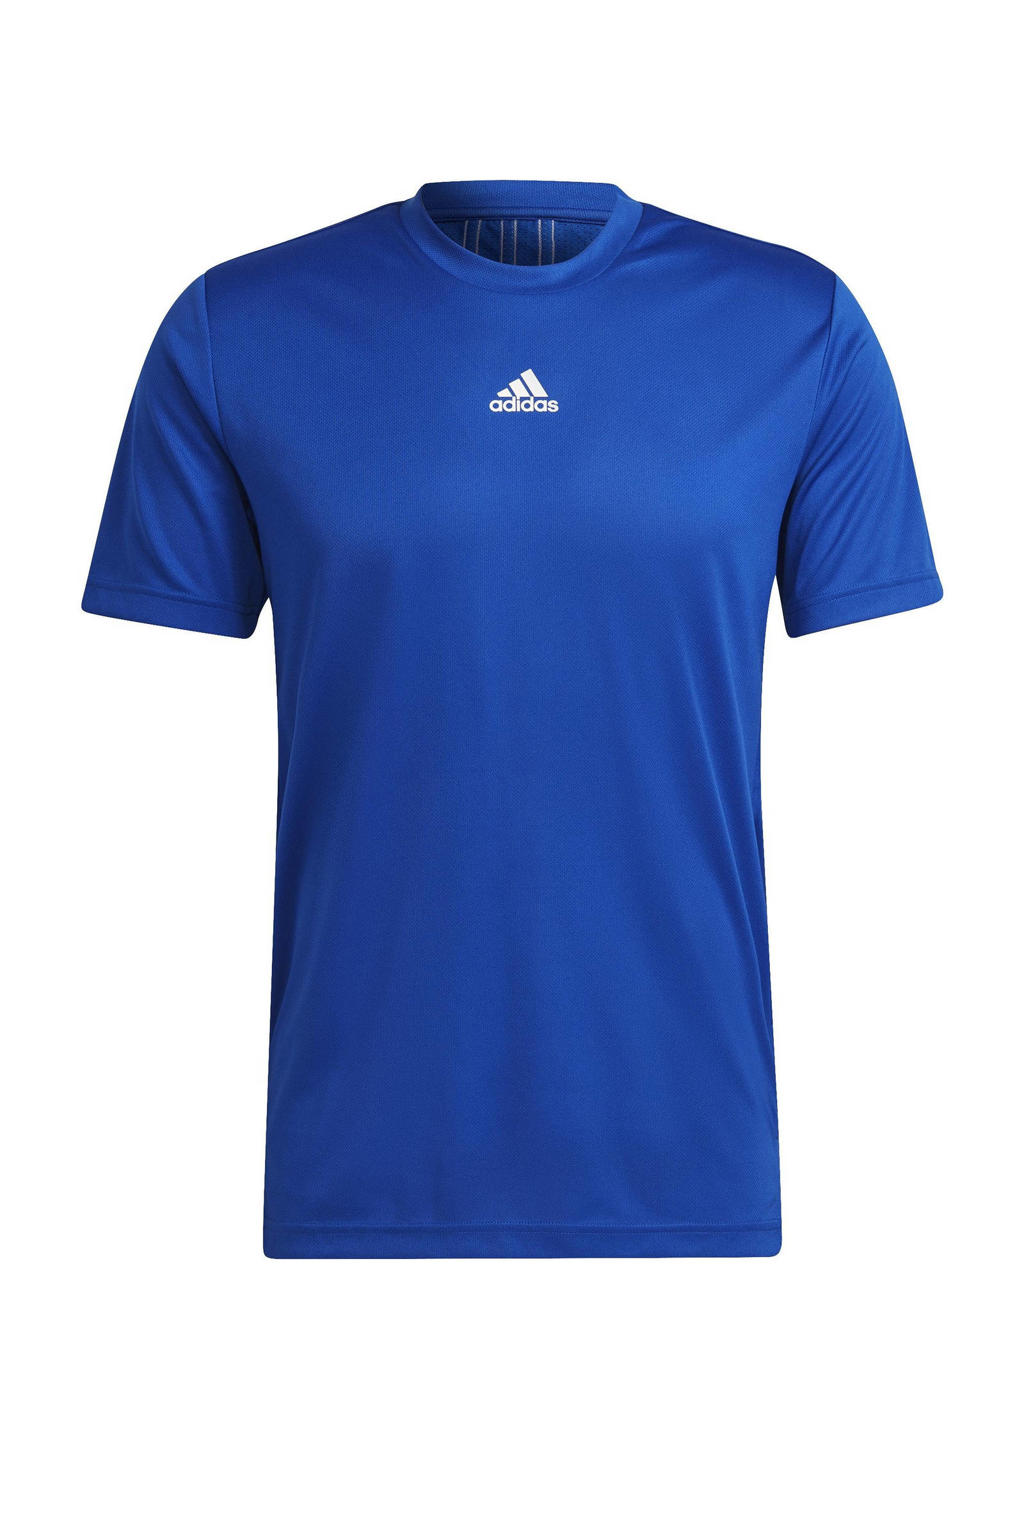 adidas Performance   sport T-shirt blauw/wit